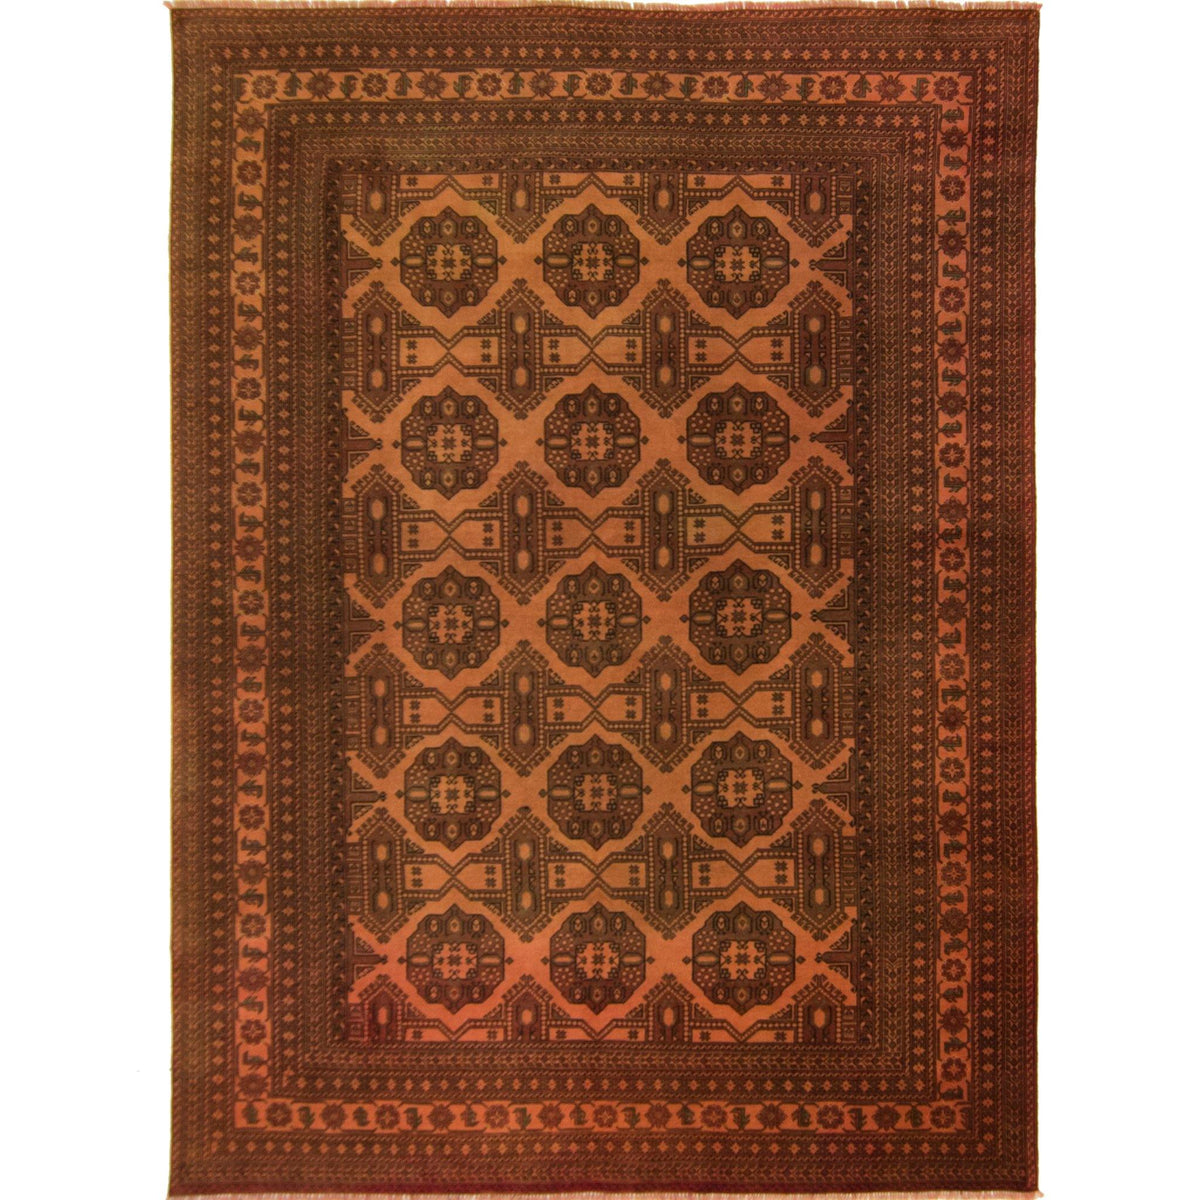 Vintage Hand-knotted Wool Turkmen Rug 239cm x 334cm